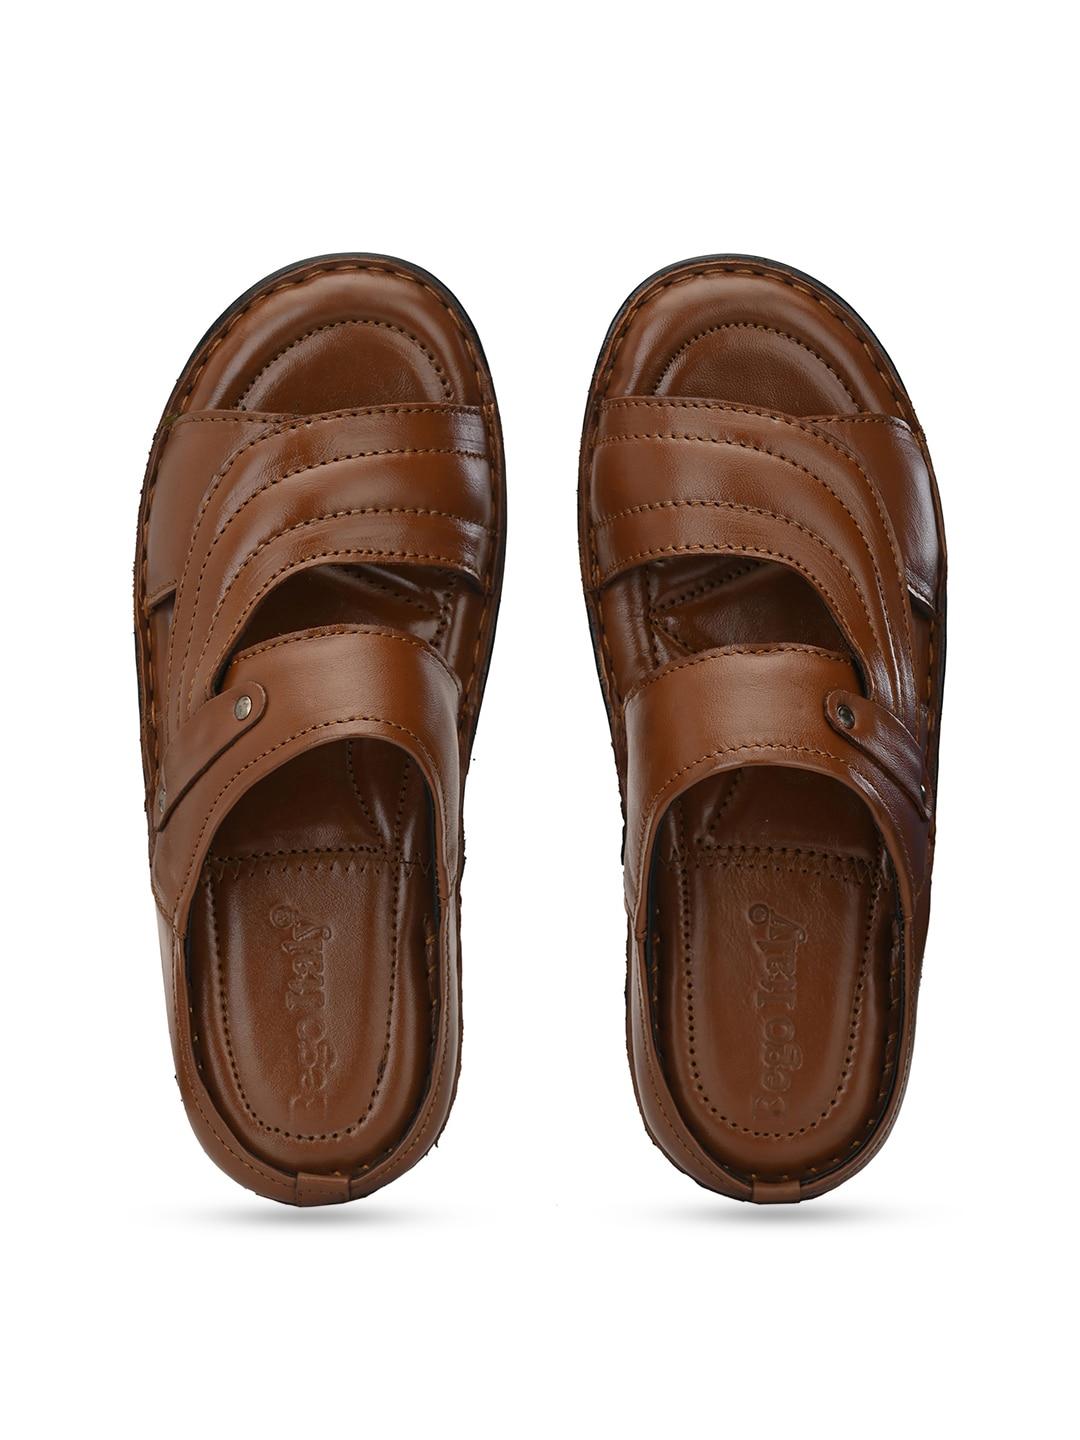 eego italy men leather comfort sandals